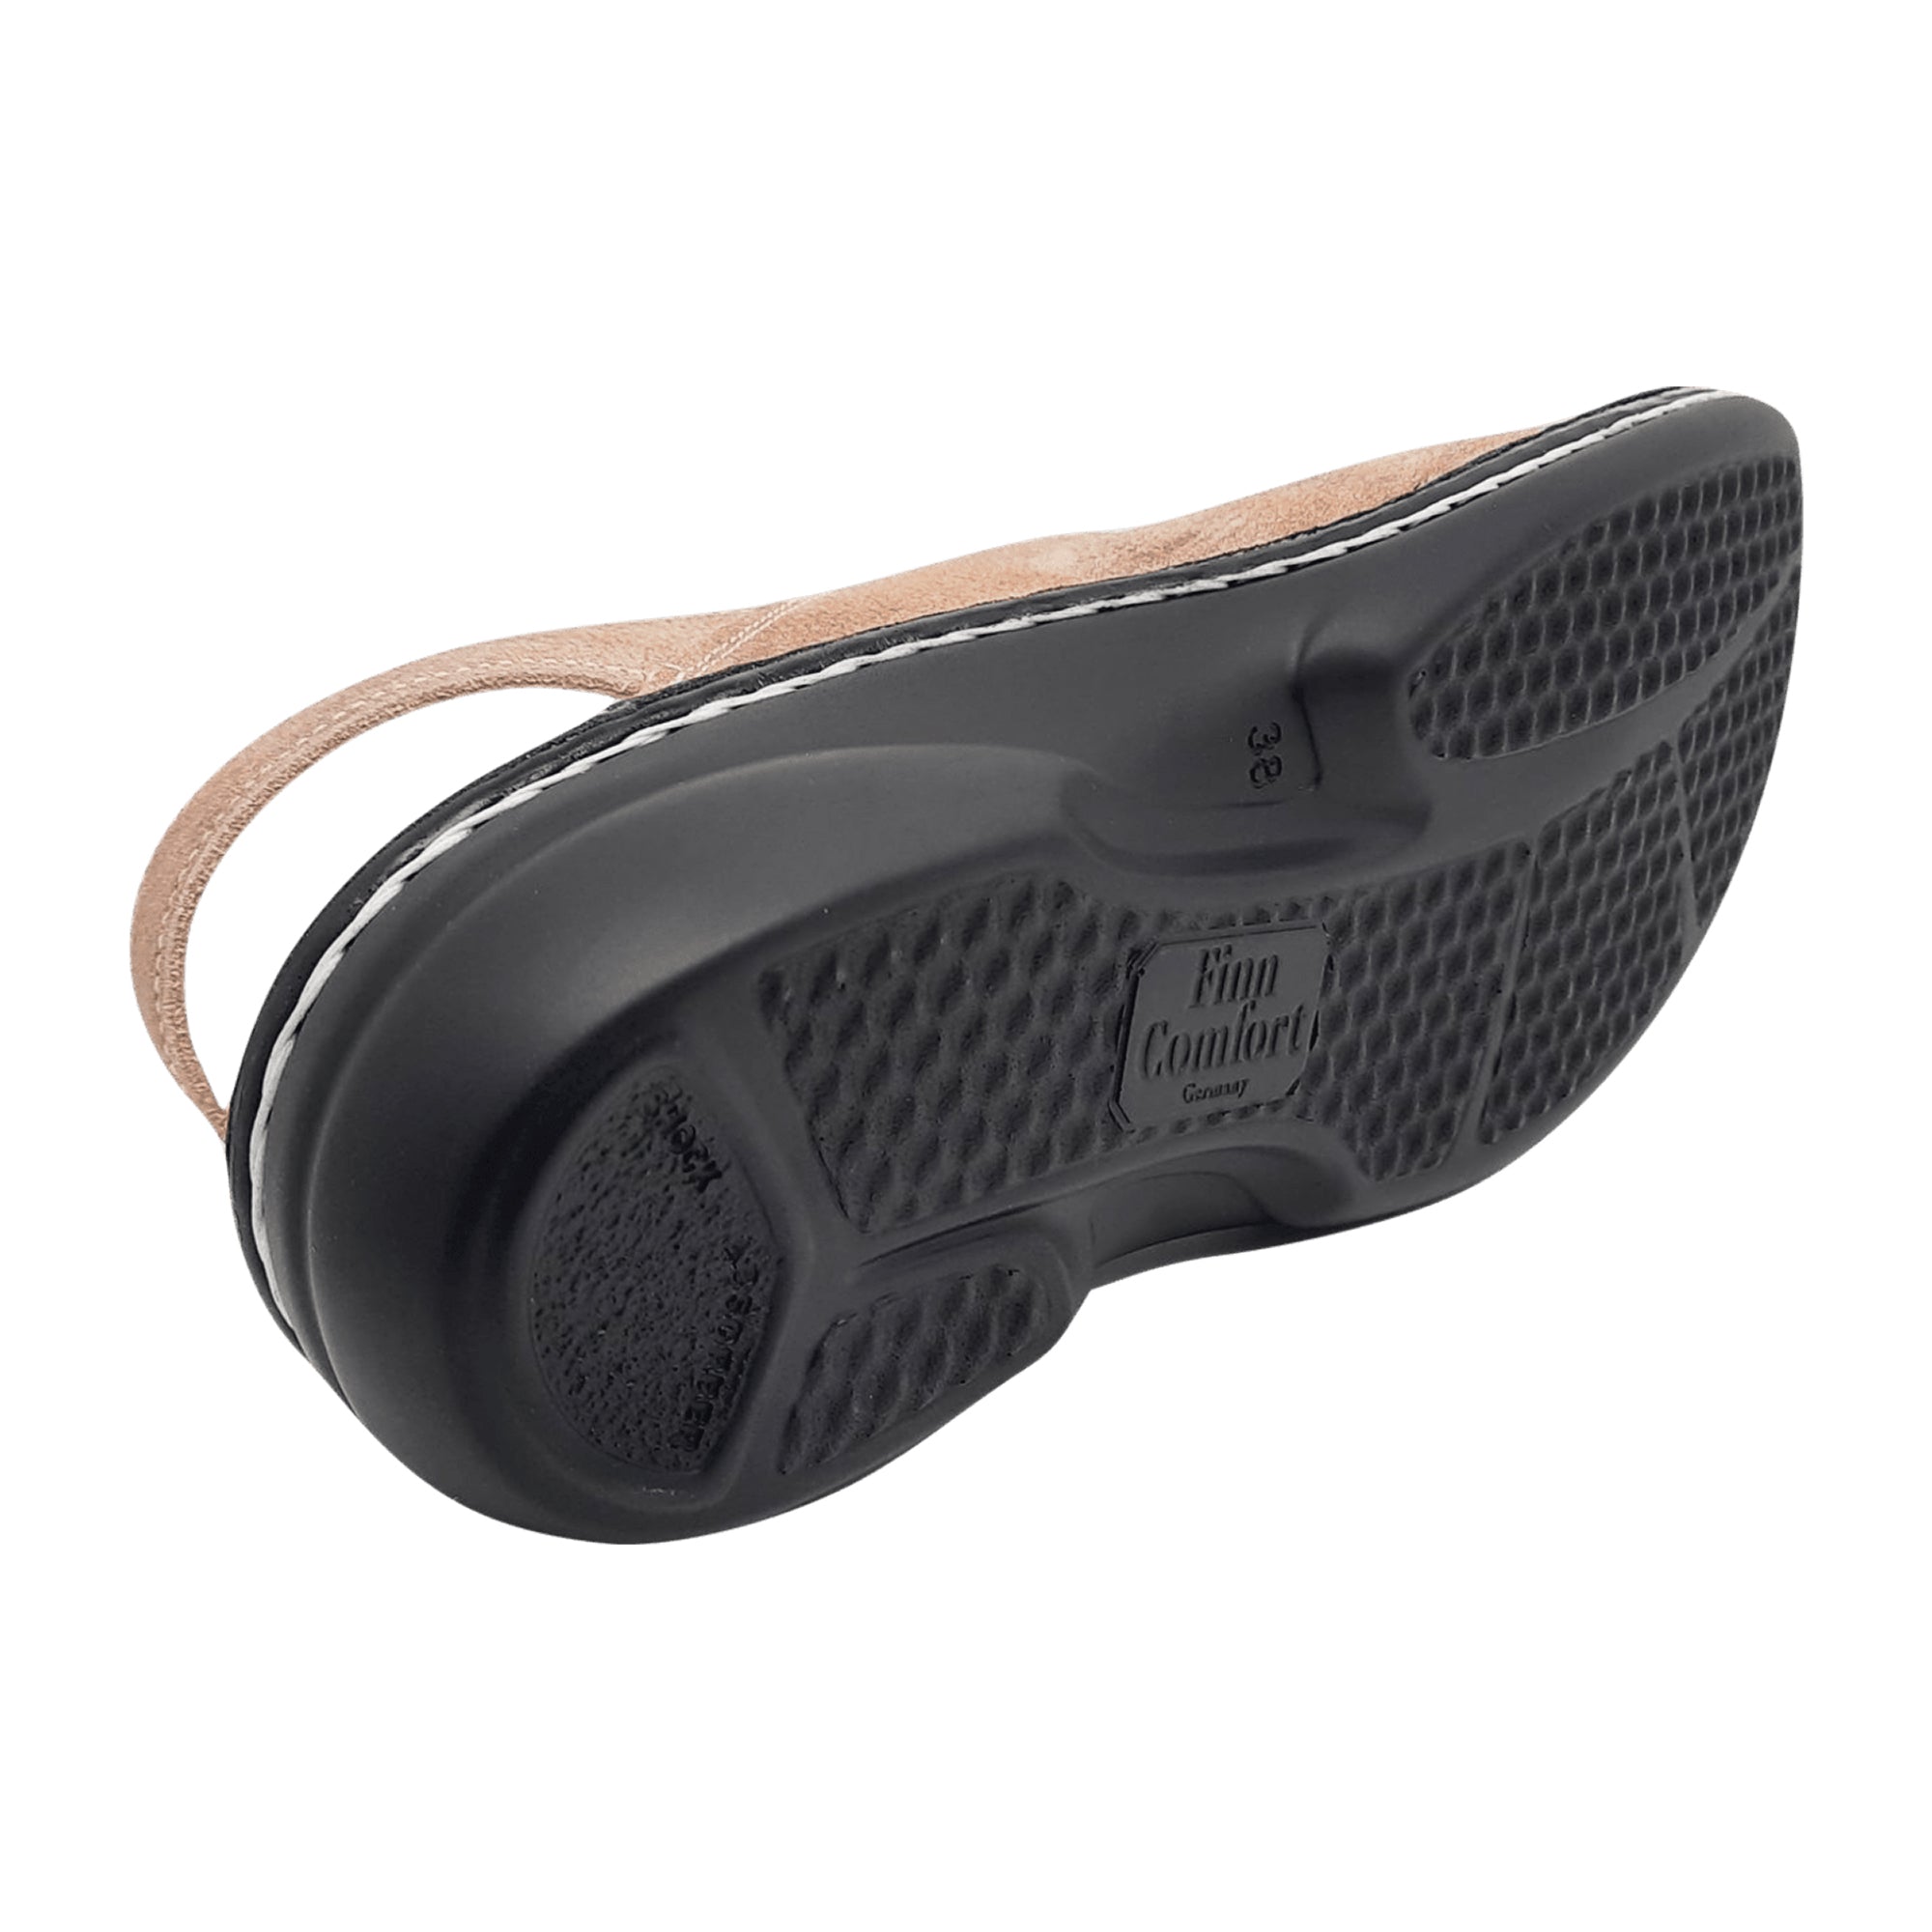 Finn Comfort SALONIKI Women's Comfort Sandals - Chic Brown Leather